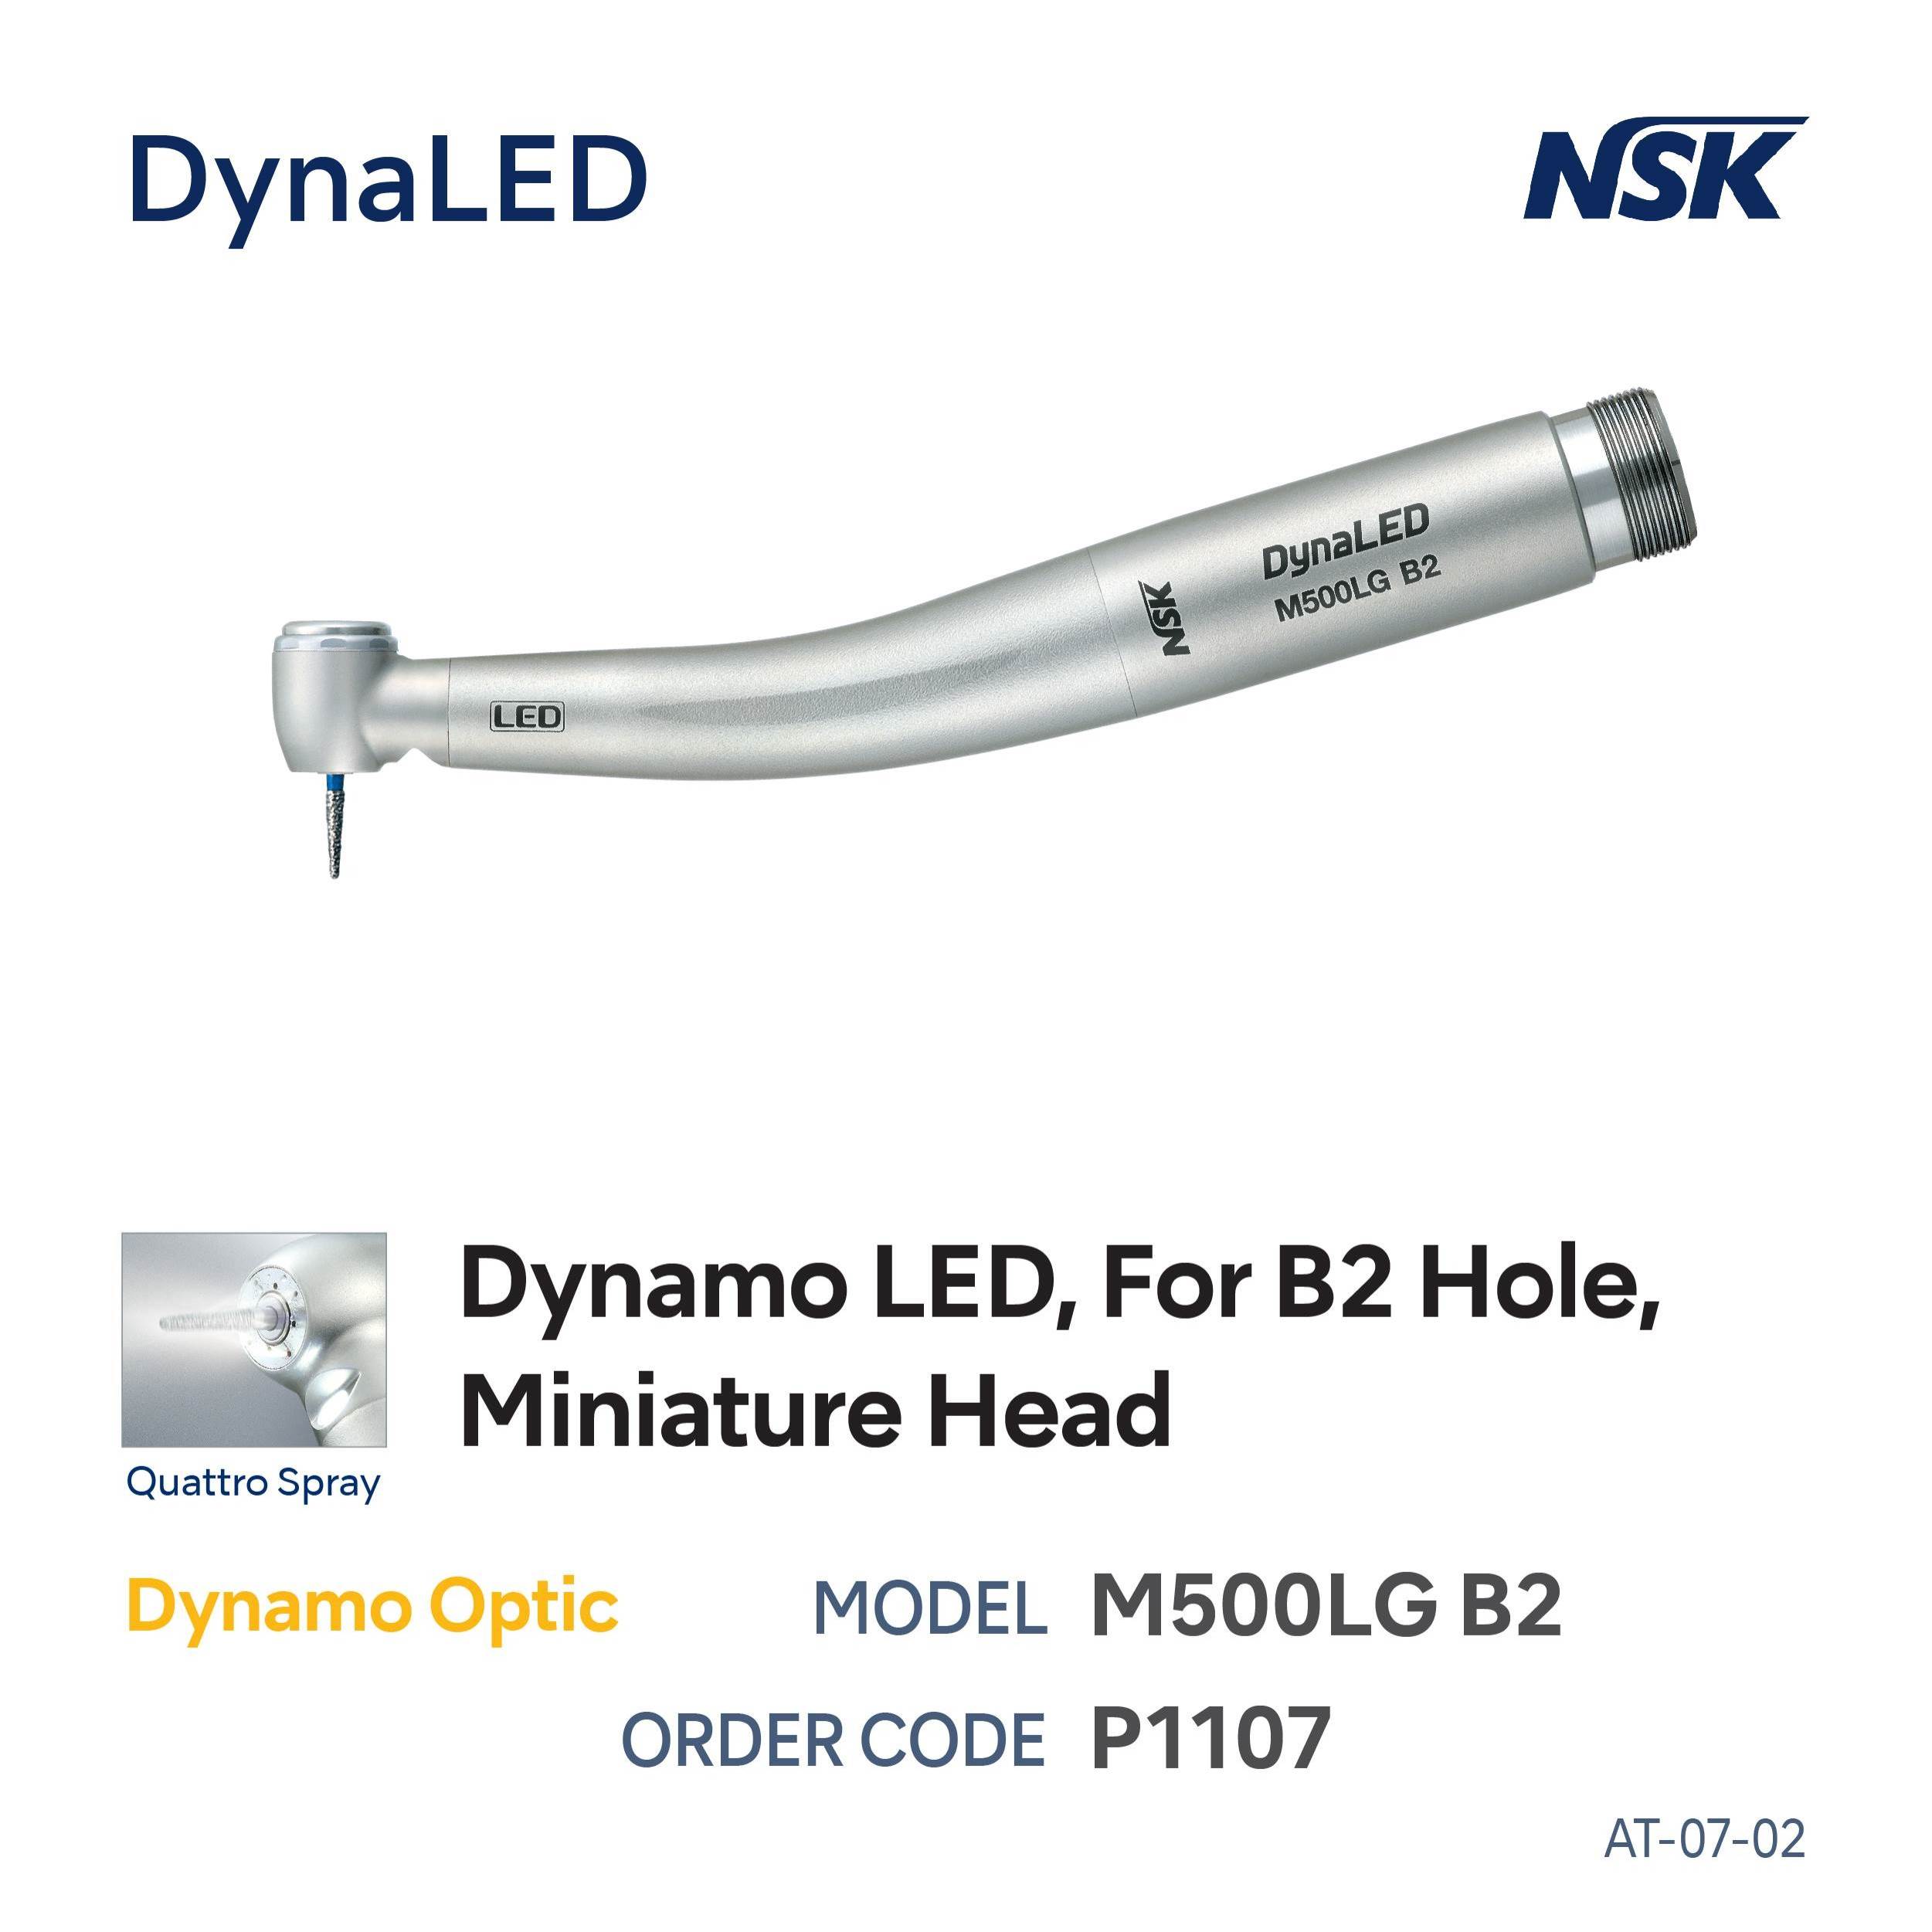 Dyna LED Handpiece M500LG B2